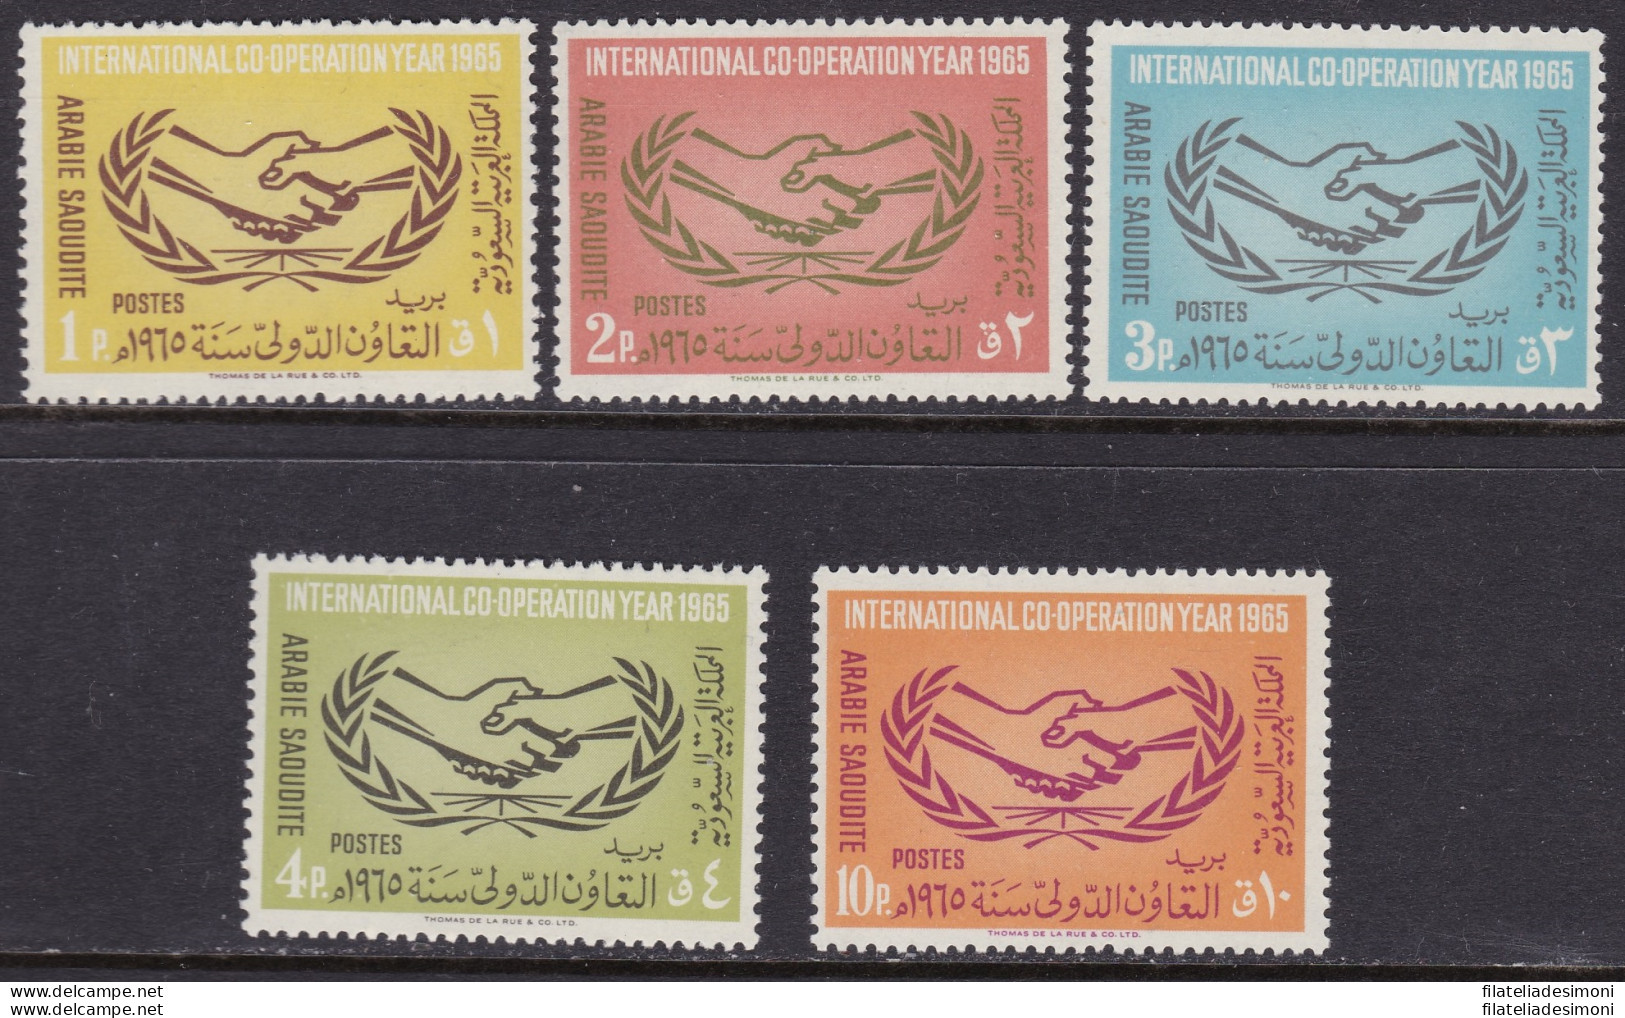 1965 ARABIA SAUDITA/SAUDI ARABIA, SG 621/625 MNH/** - Arabie Saoudite